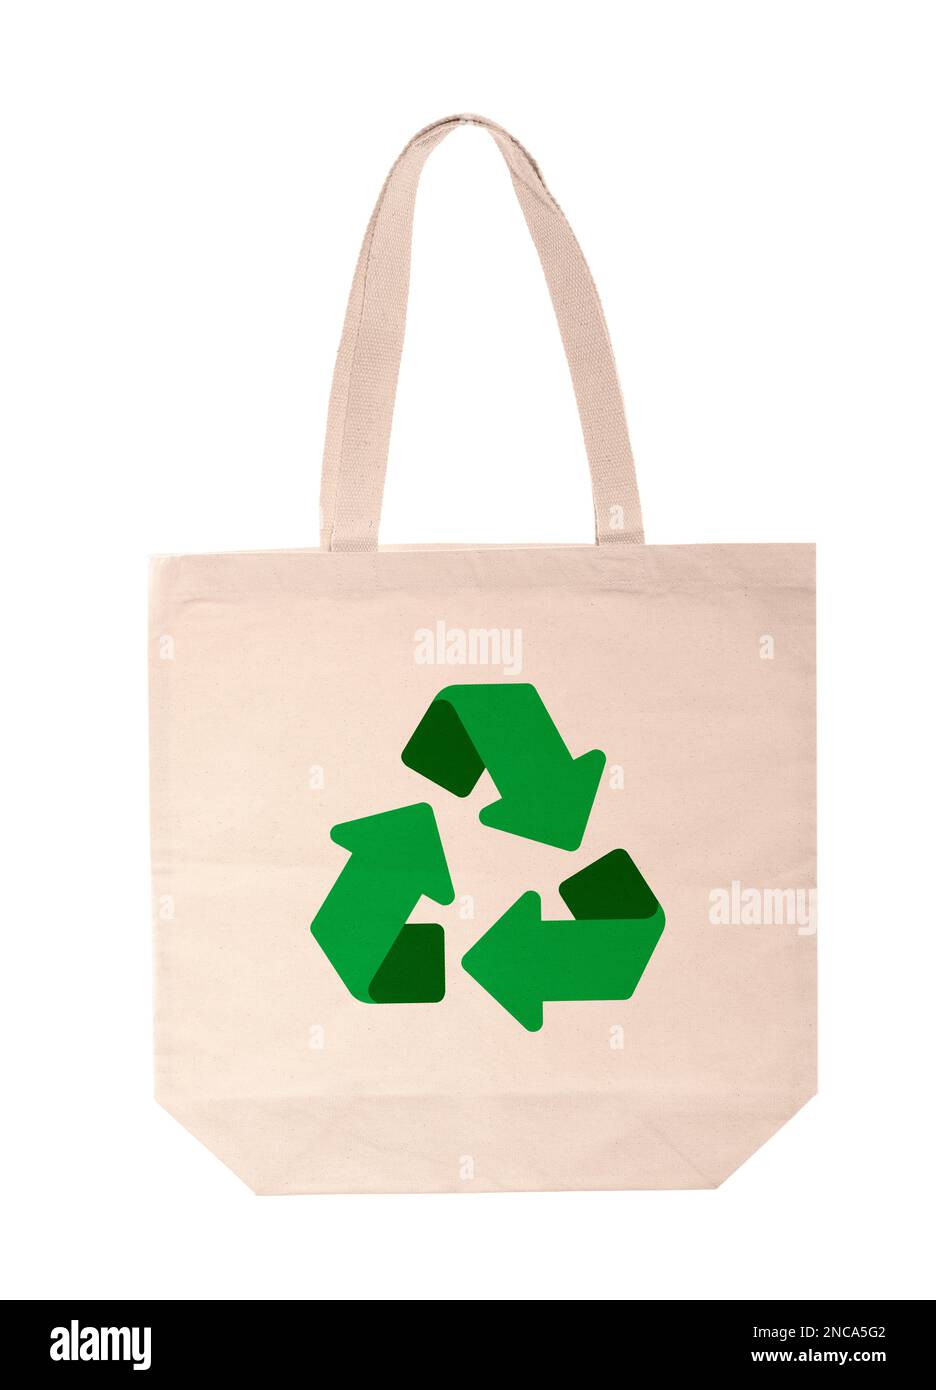 https://c8.alamy.com/comp/2NCA5G2/eco-bag-with-recycling-symbol-on-white-background-2NCA5G2.jpg